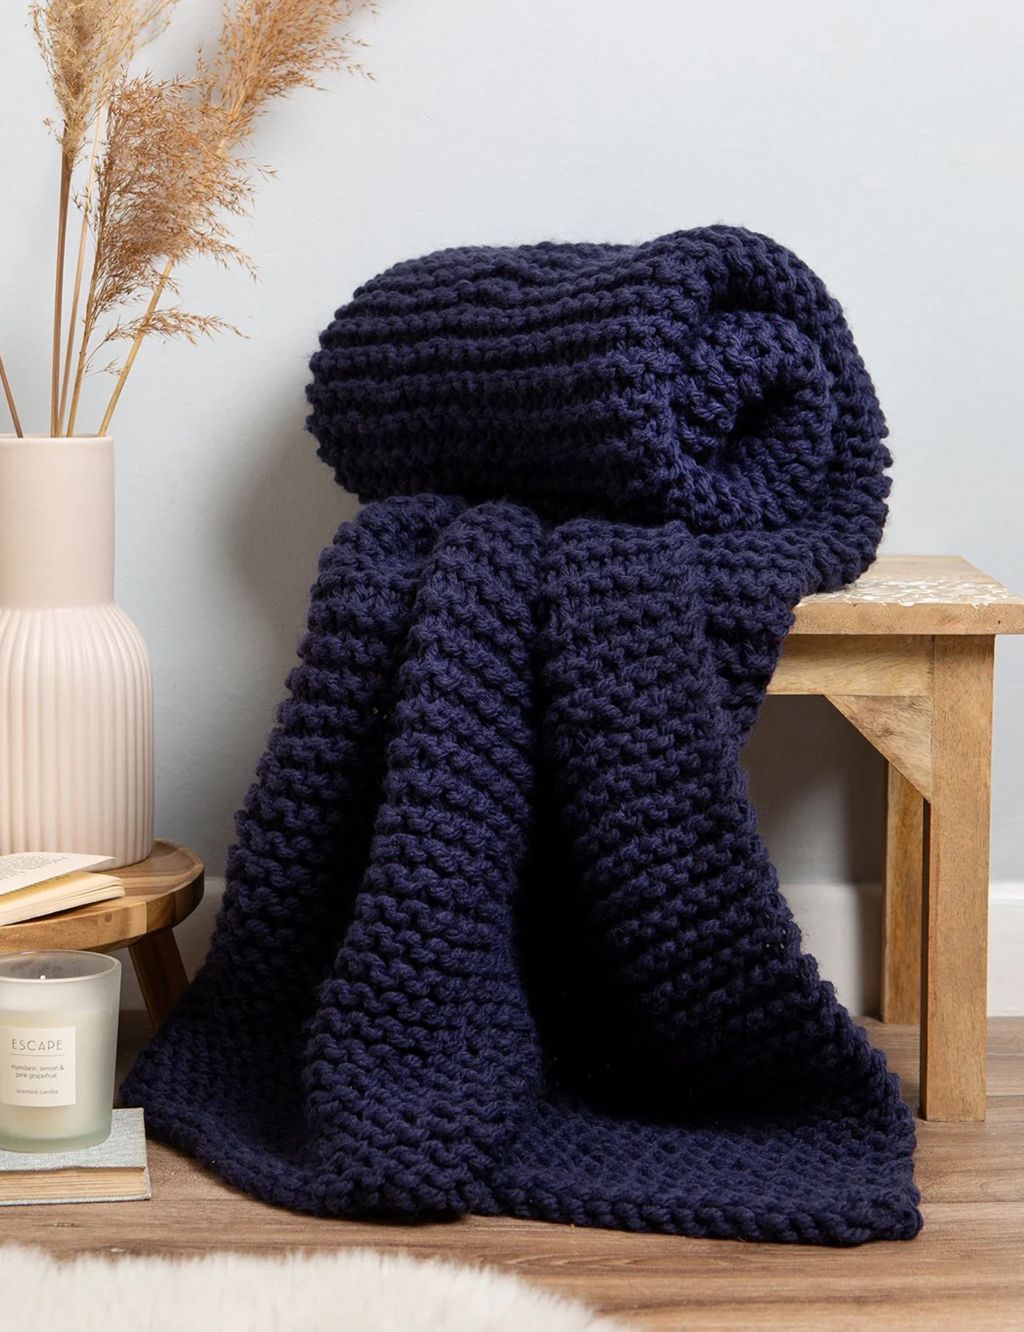 Garter Stitch Blanket Knitting Kit 3 of 5